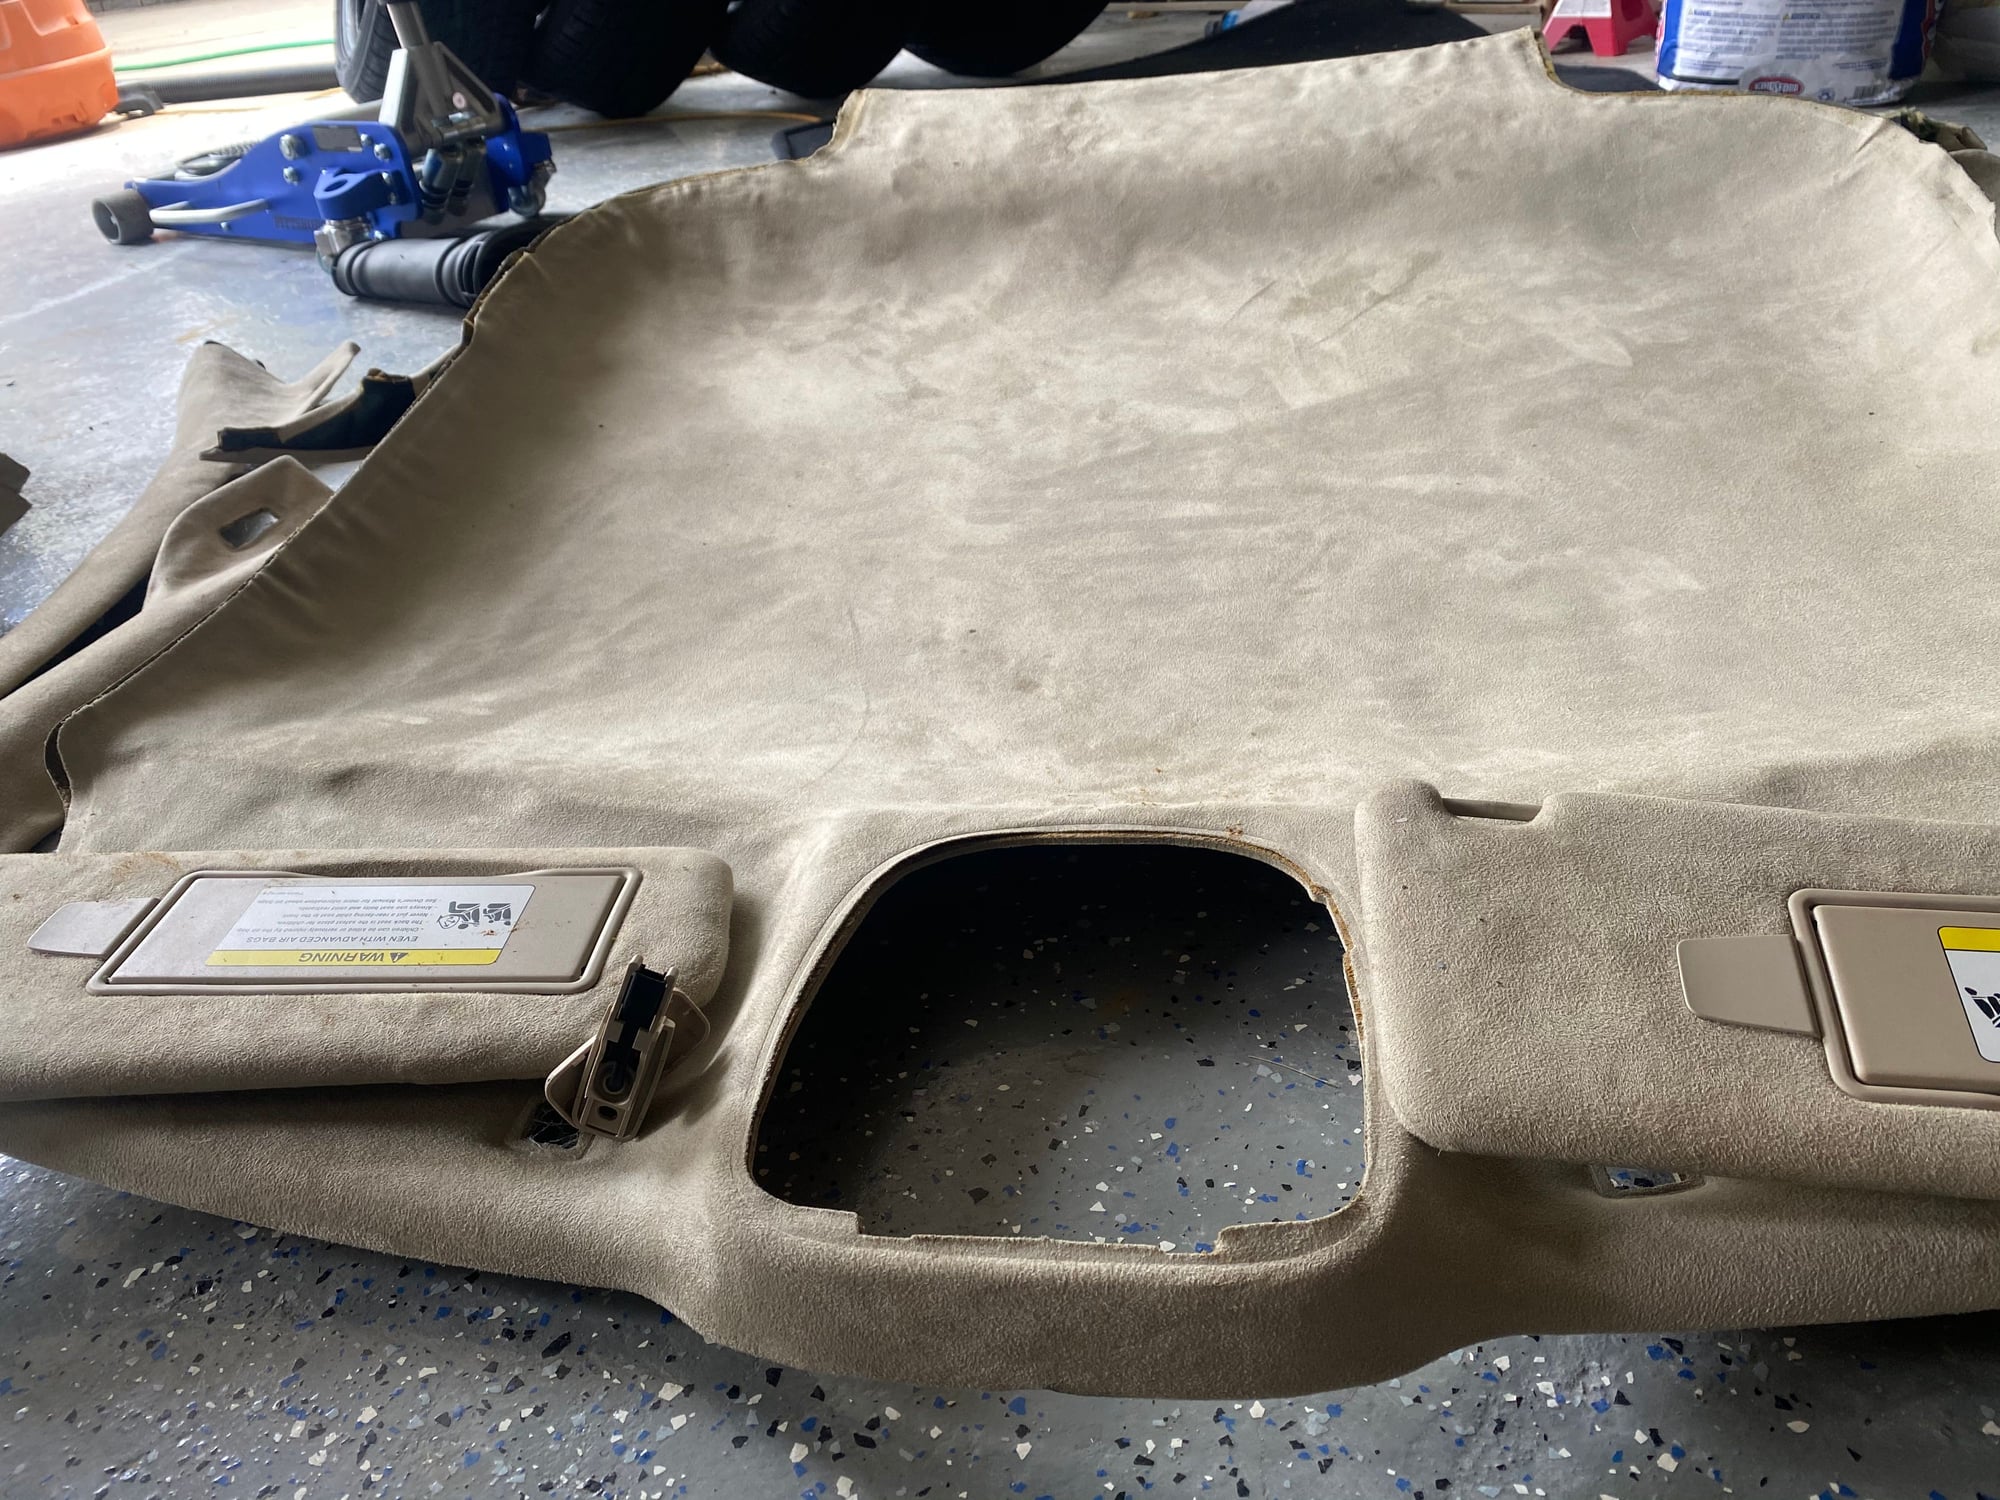 Interior/Upholstery - Jaguar XK suede headliner and pillars - Used - 2007 to 2015 Jaguar XK150 - Mountain Brook, AL 35223, United States